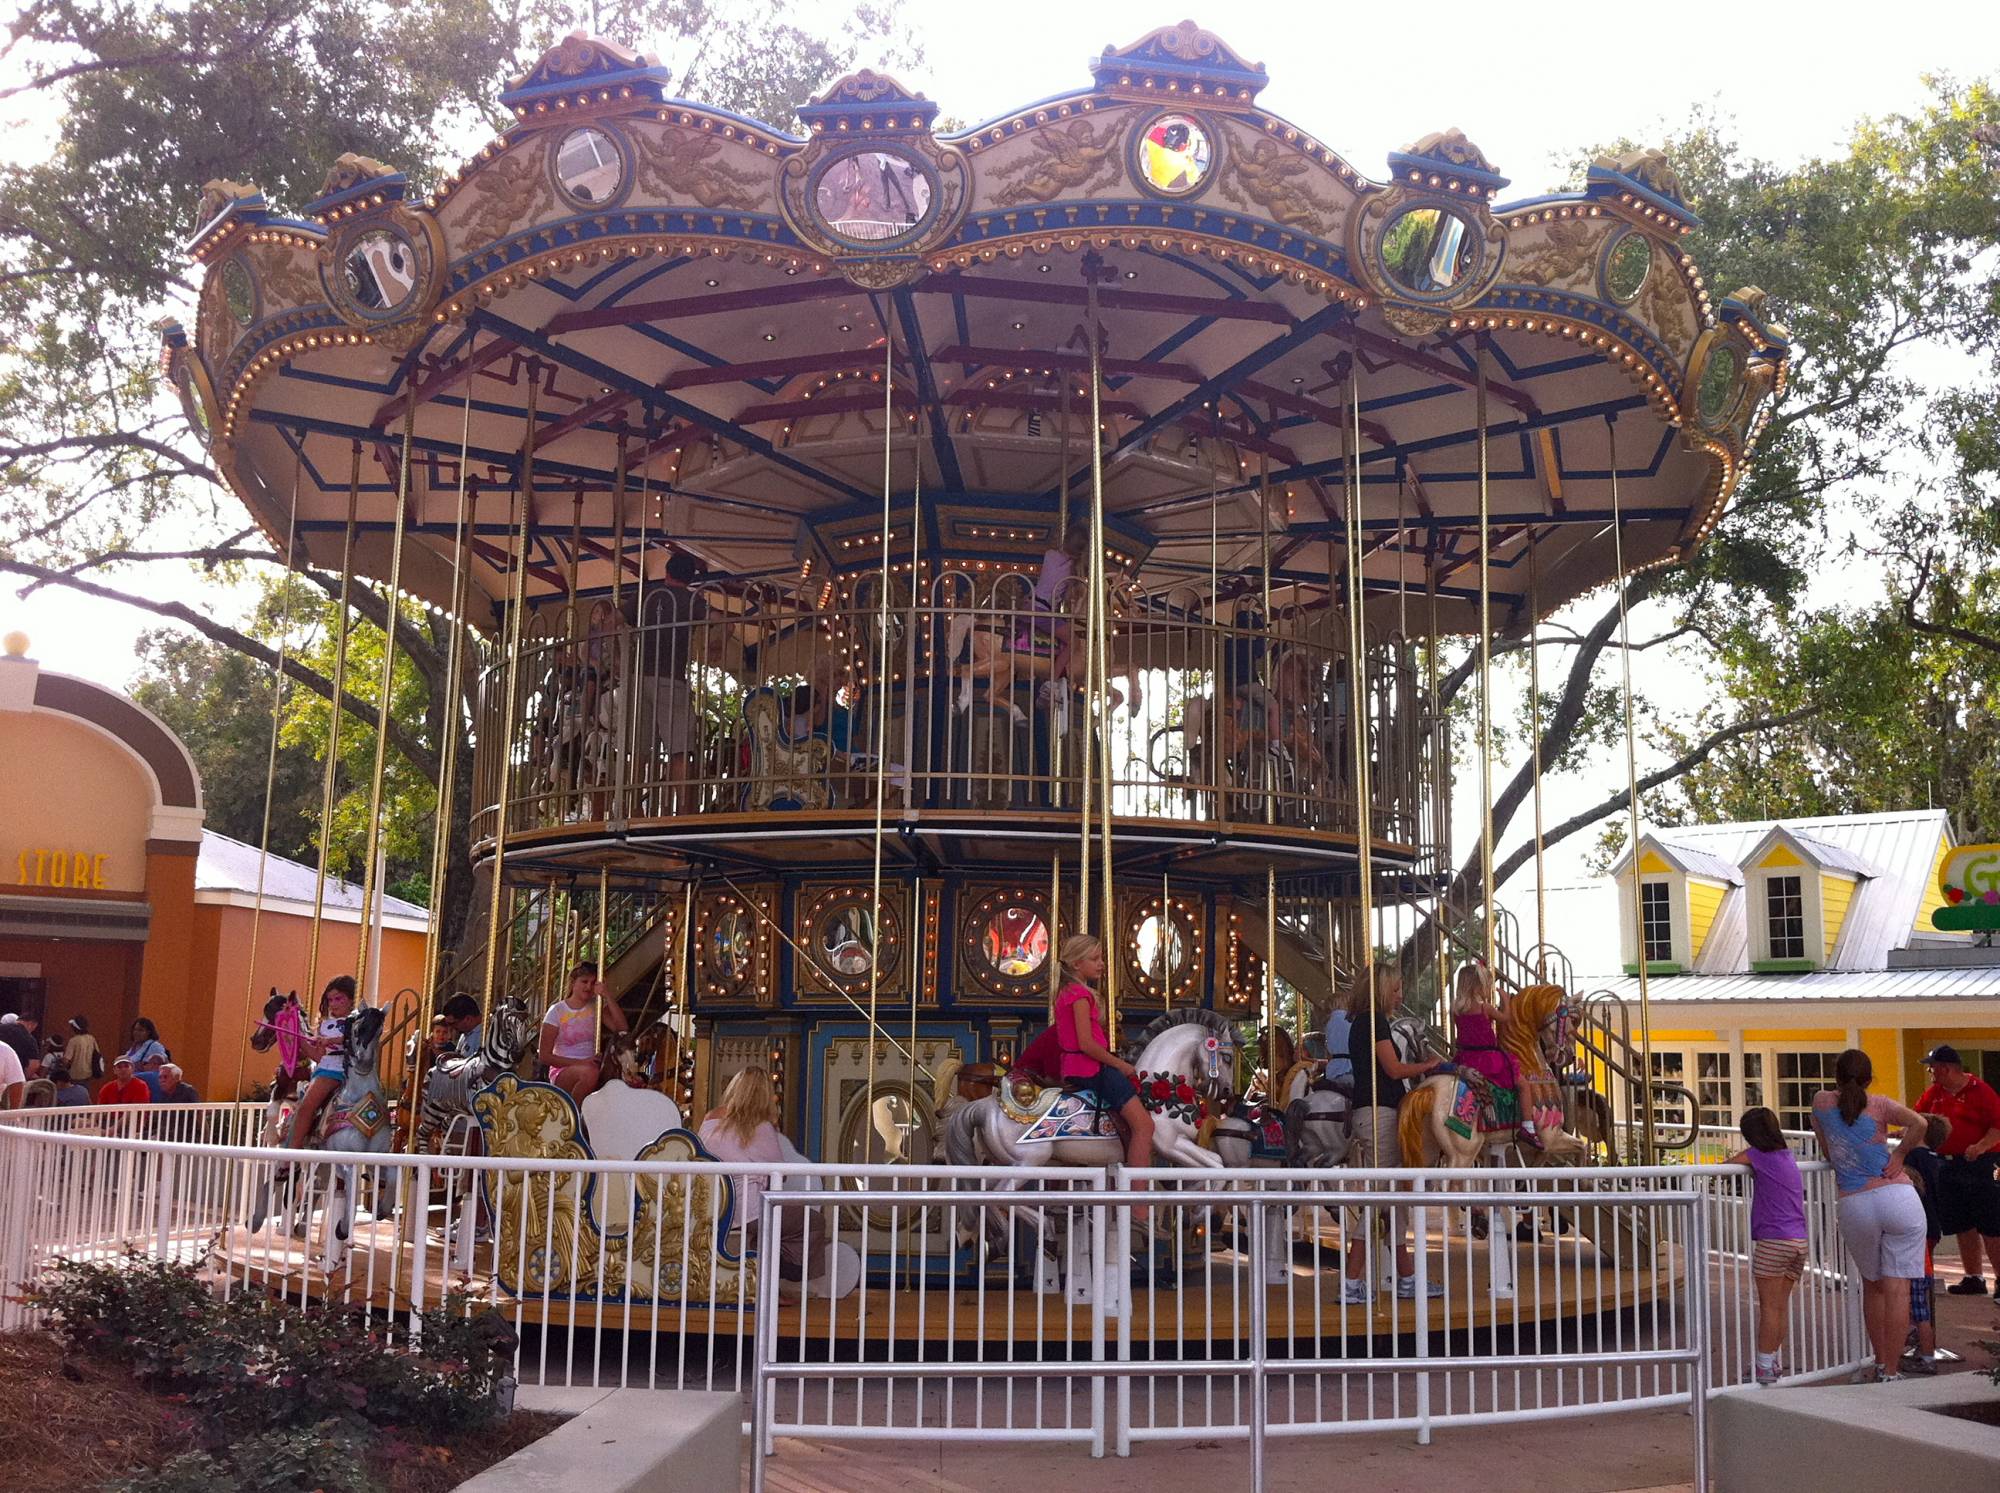 Grand Carousel at LEGOLAND Florida